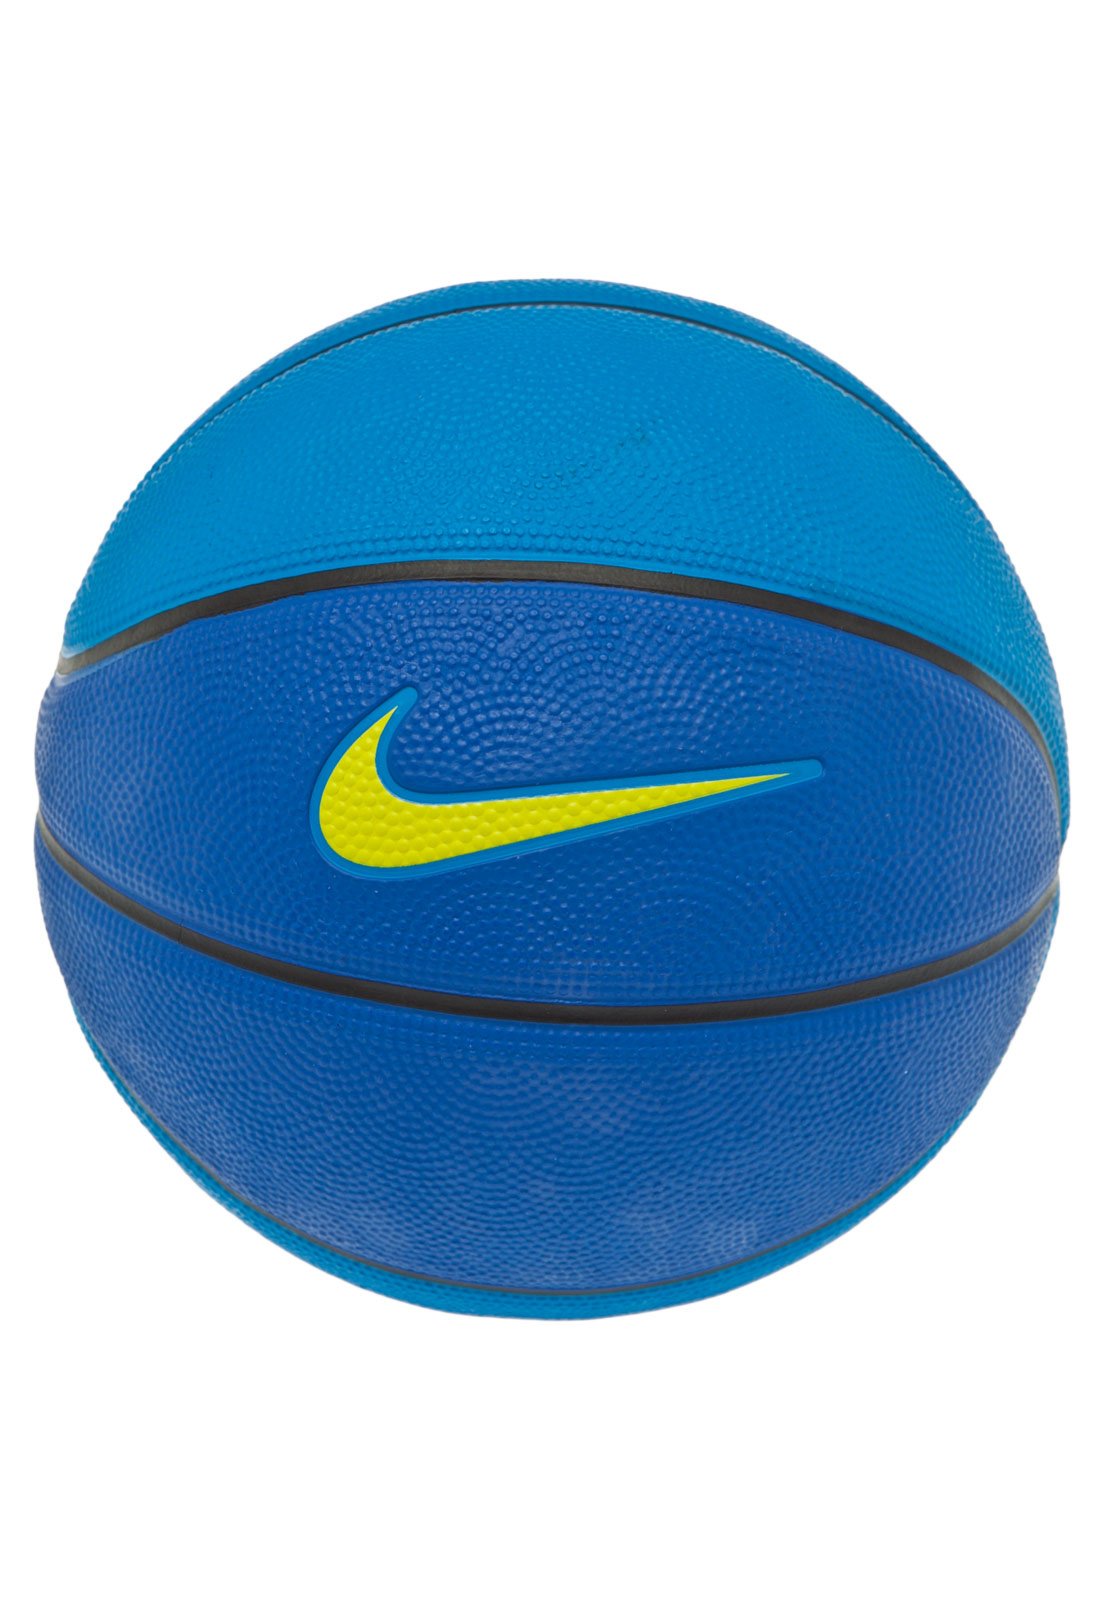 Bola de Basquete Nike Swoosh Mini Azul - Tamanho 3